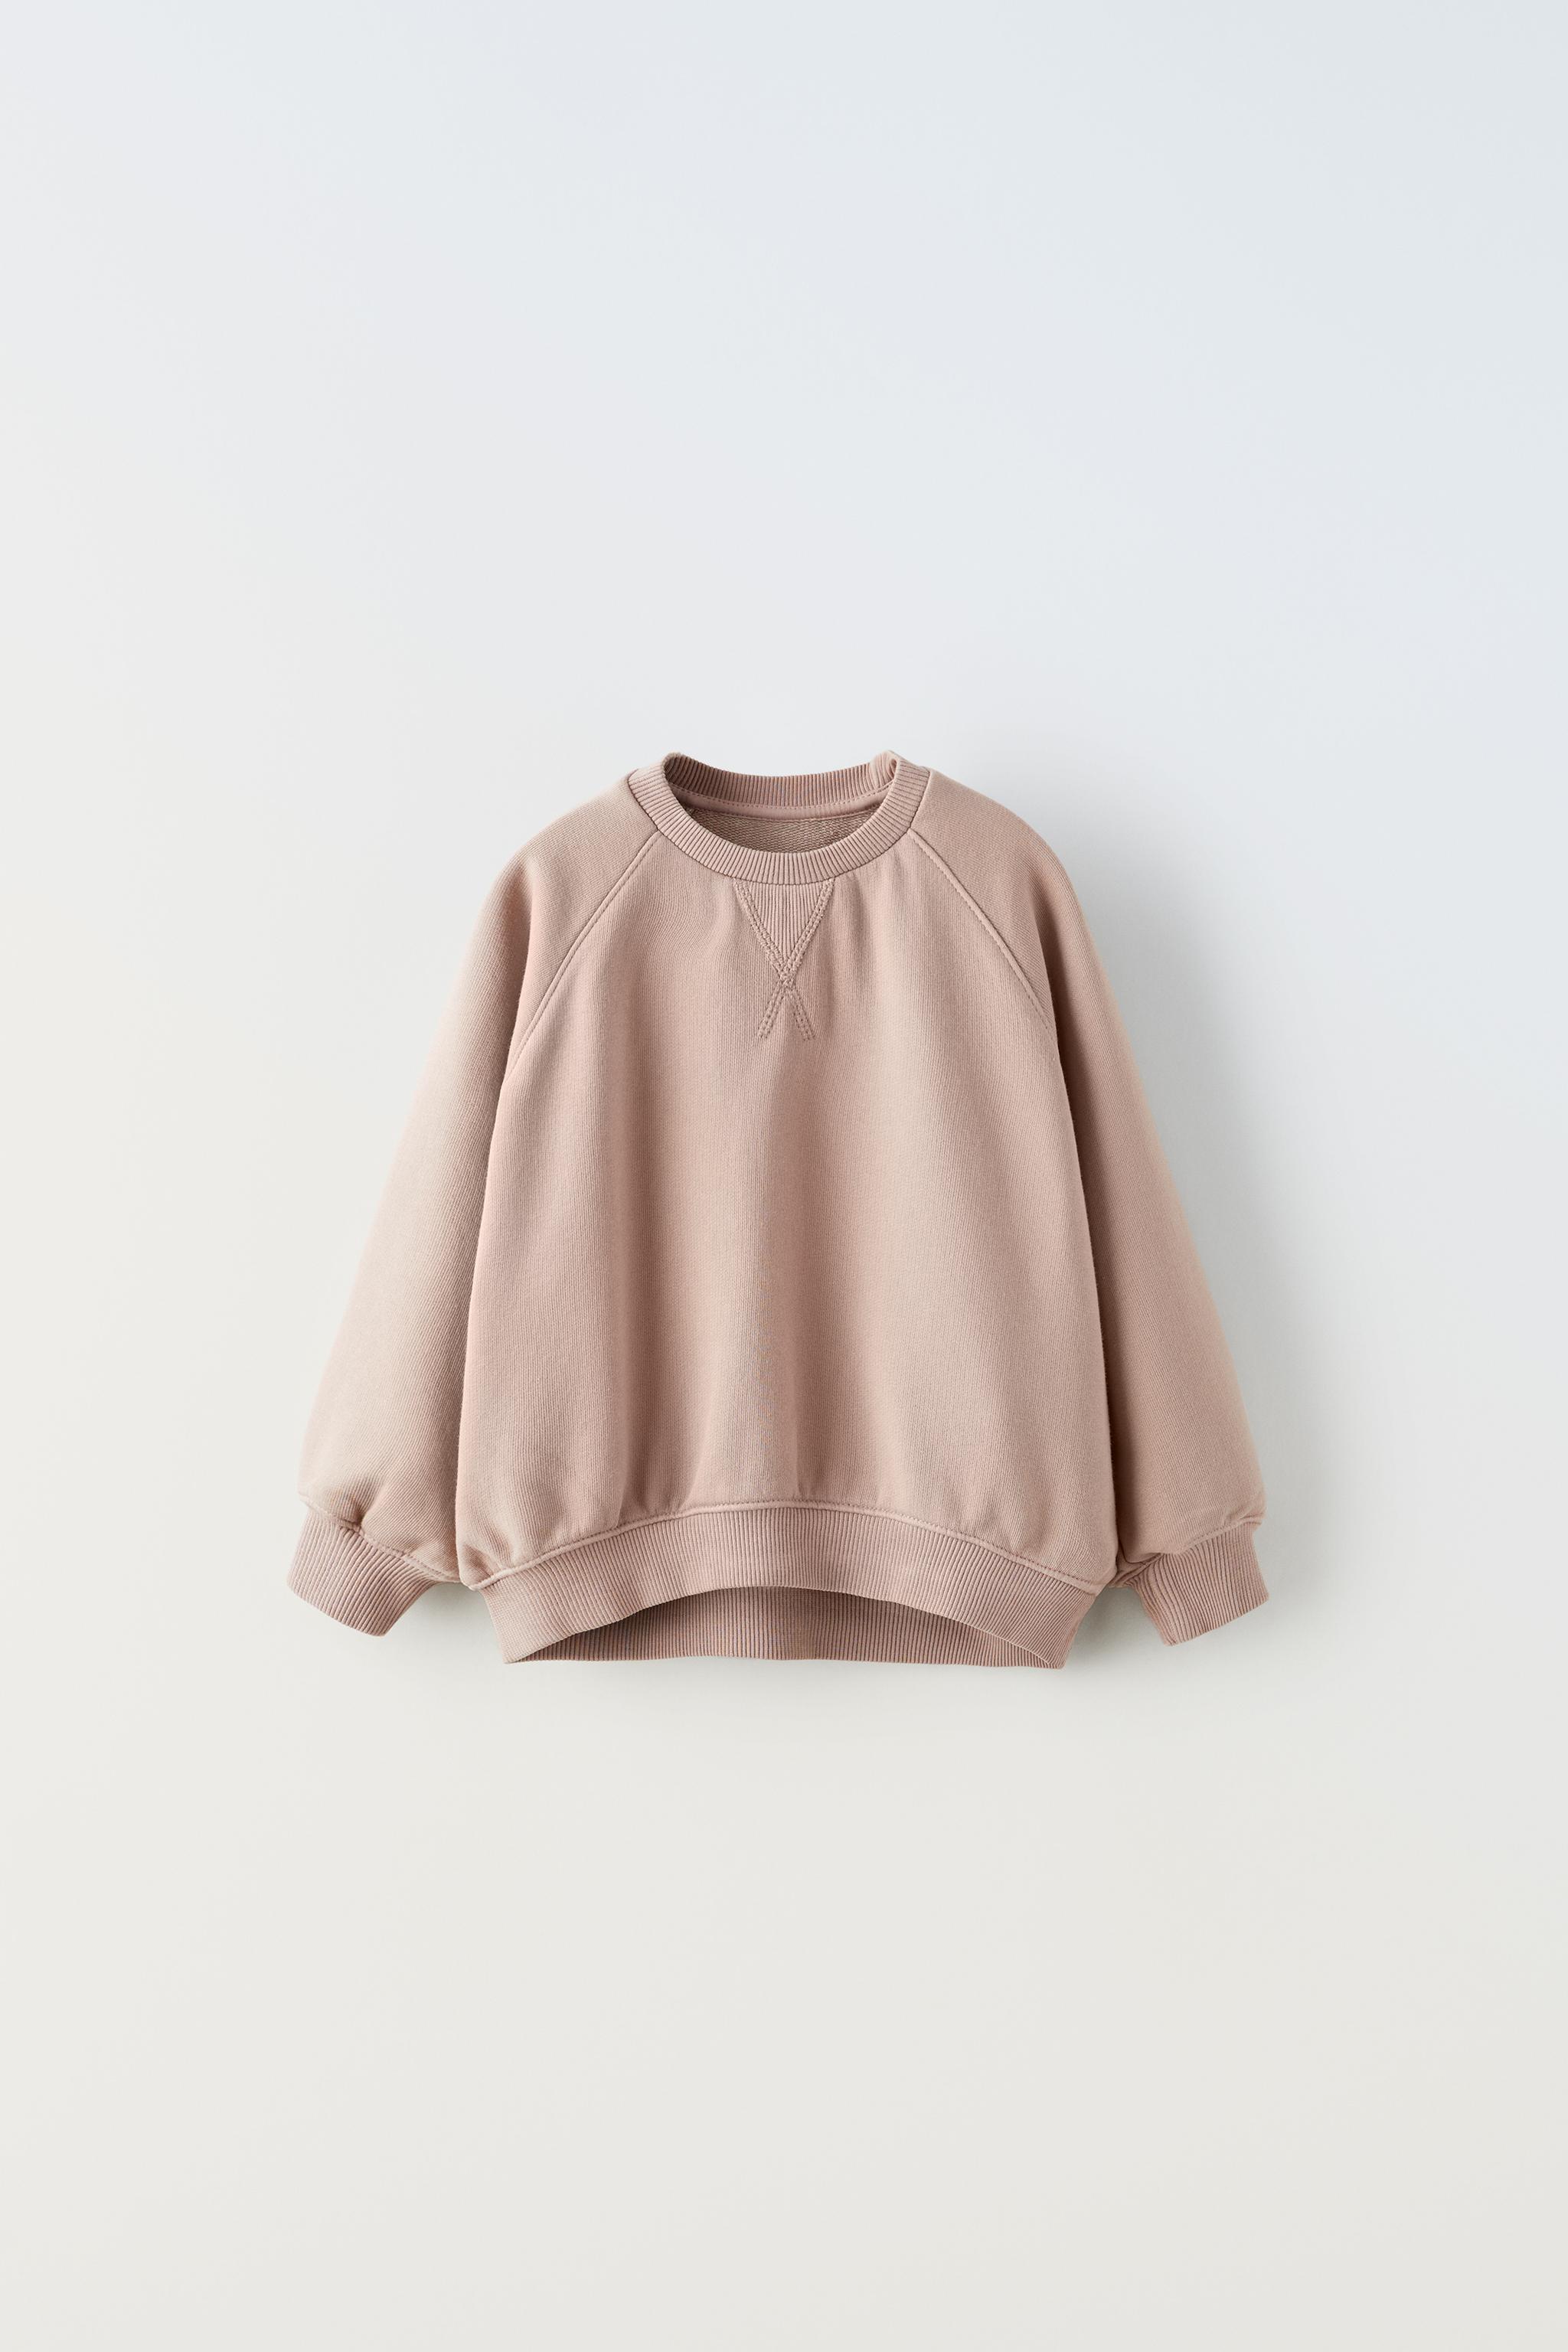 Zara Women Sweatshirt Small Pink Black Colorblock Hoodie 1/2 Zip Pockets  READ